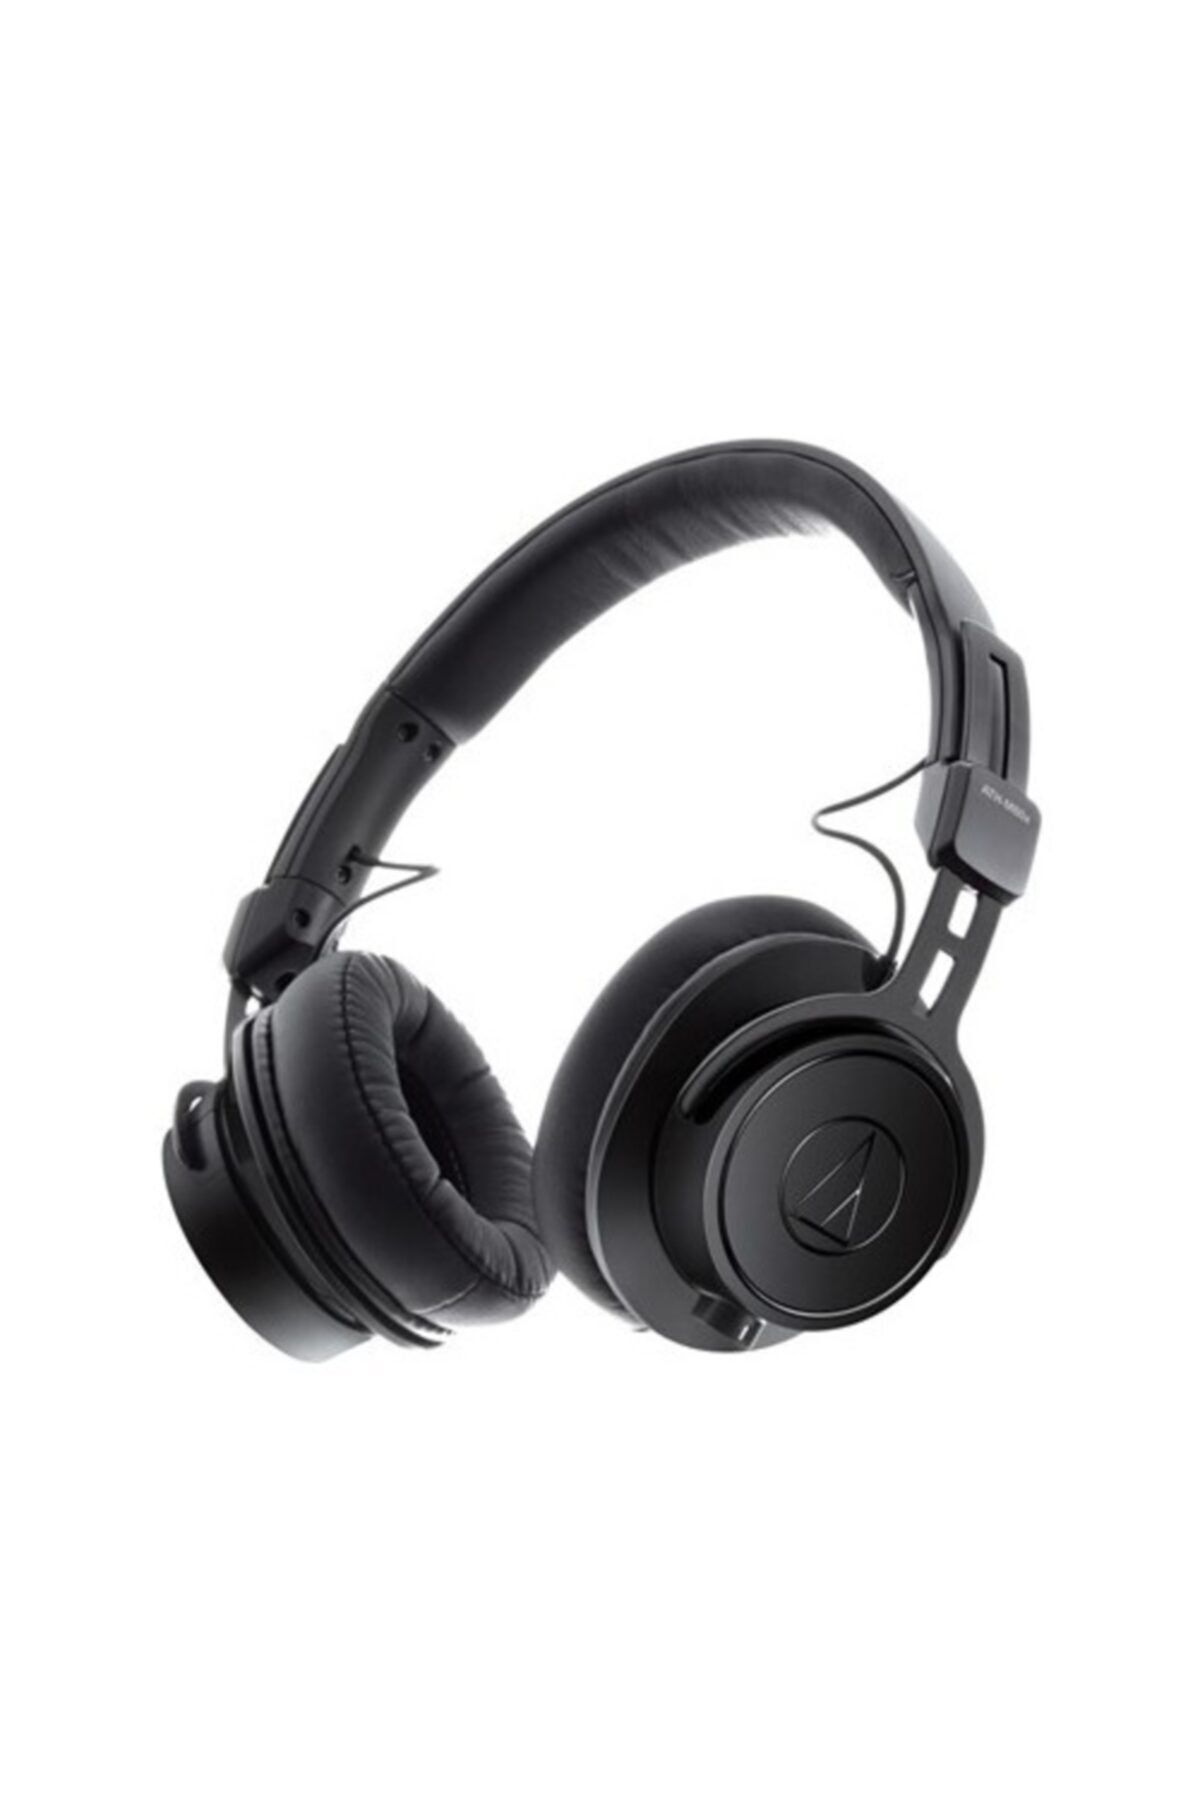 Audio Technica Audio-technica Ath-m60x Professional Monitor Headphones